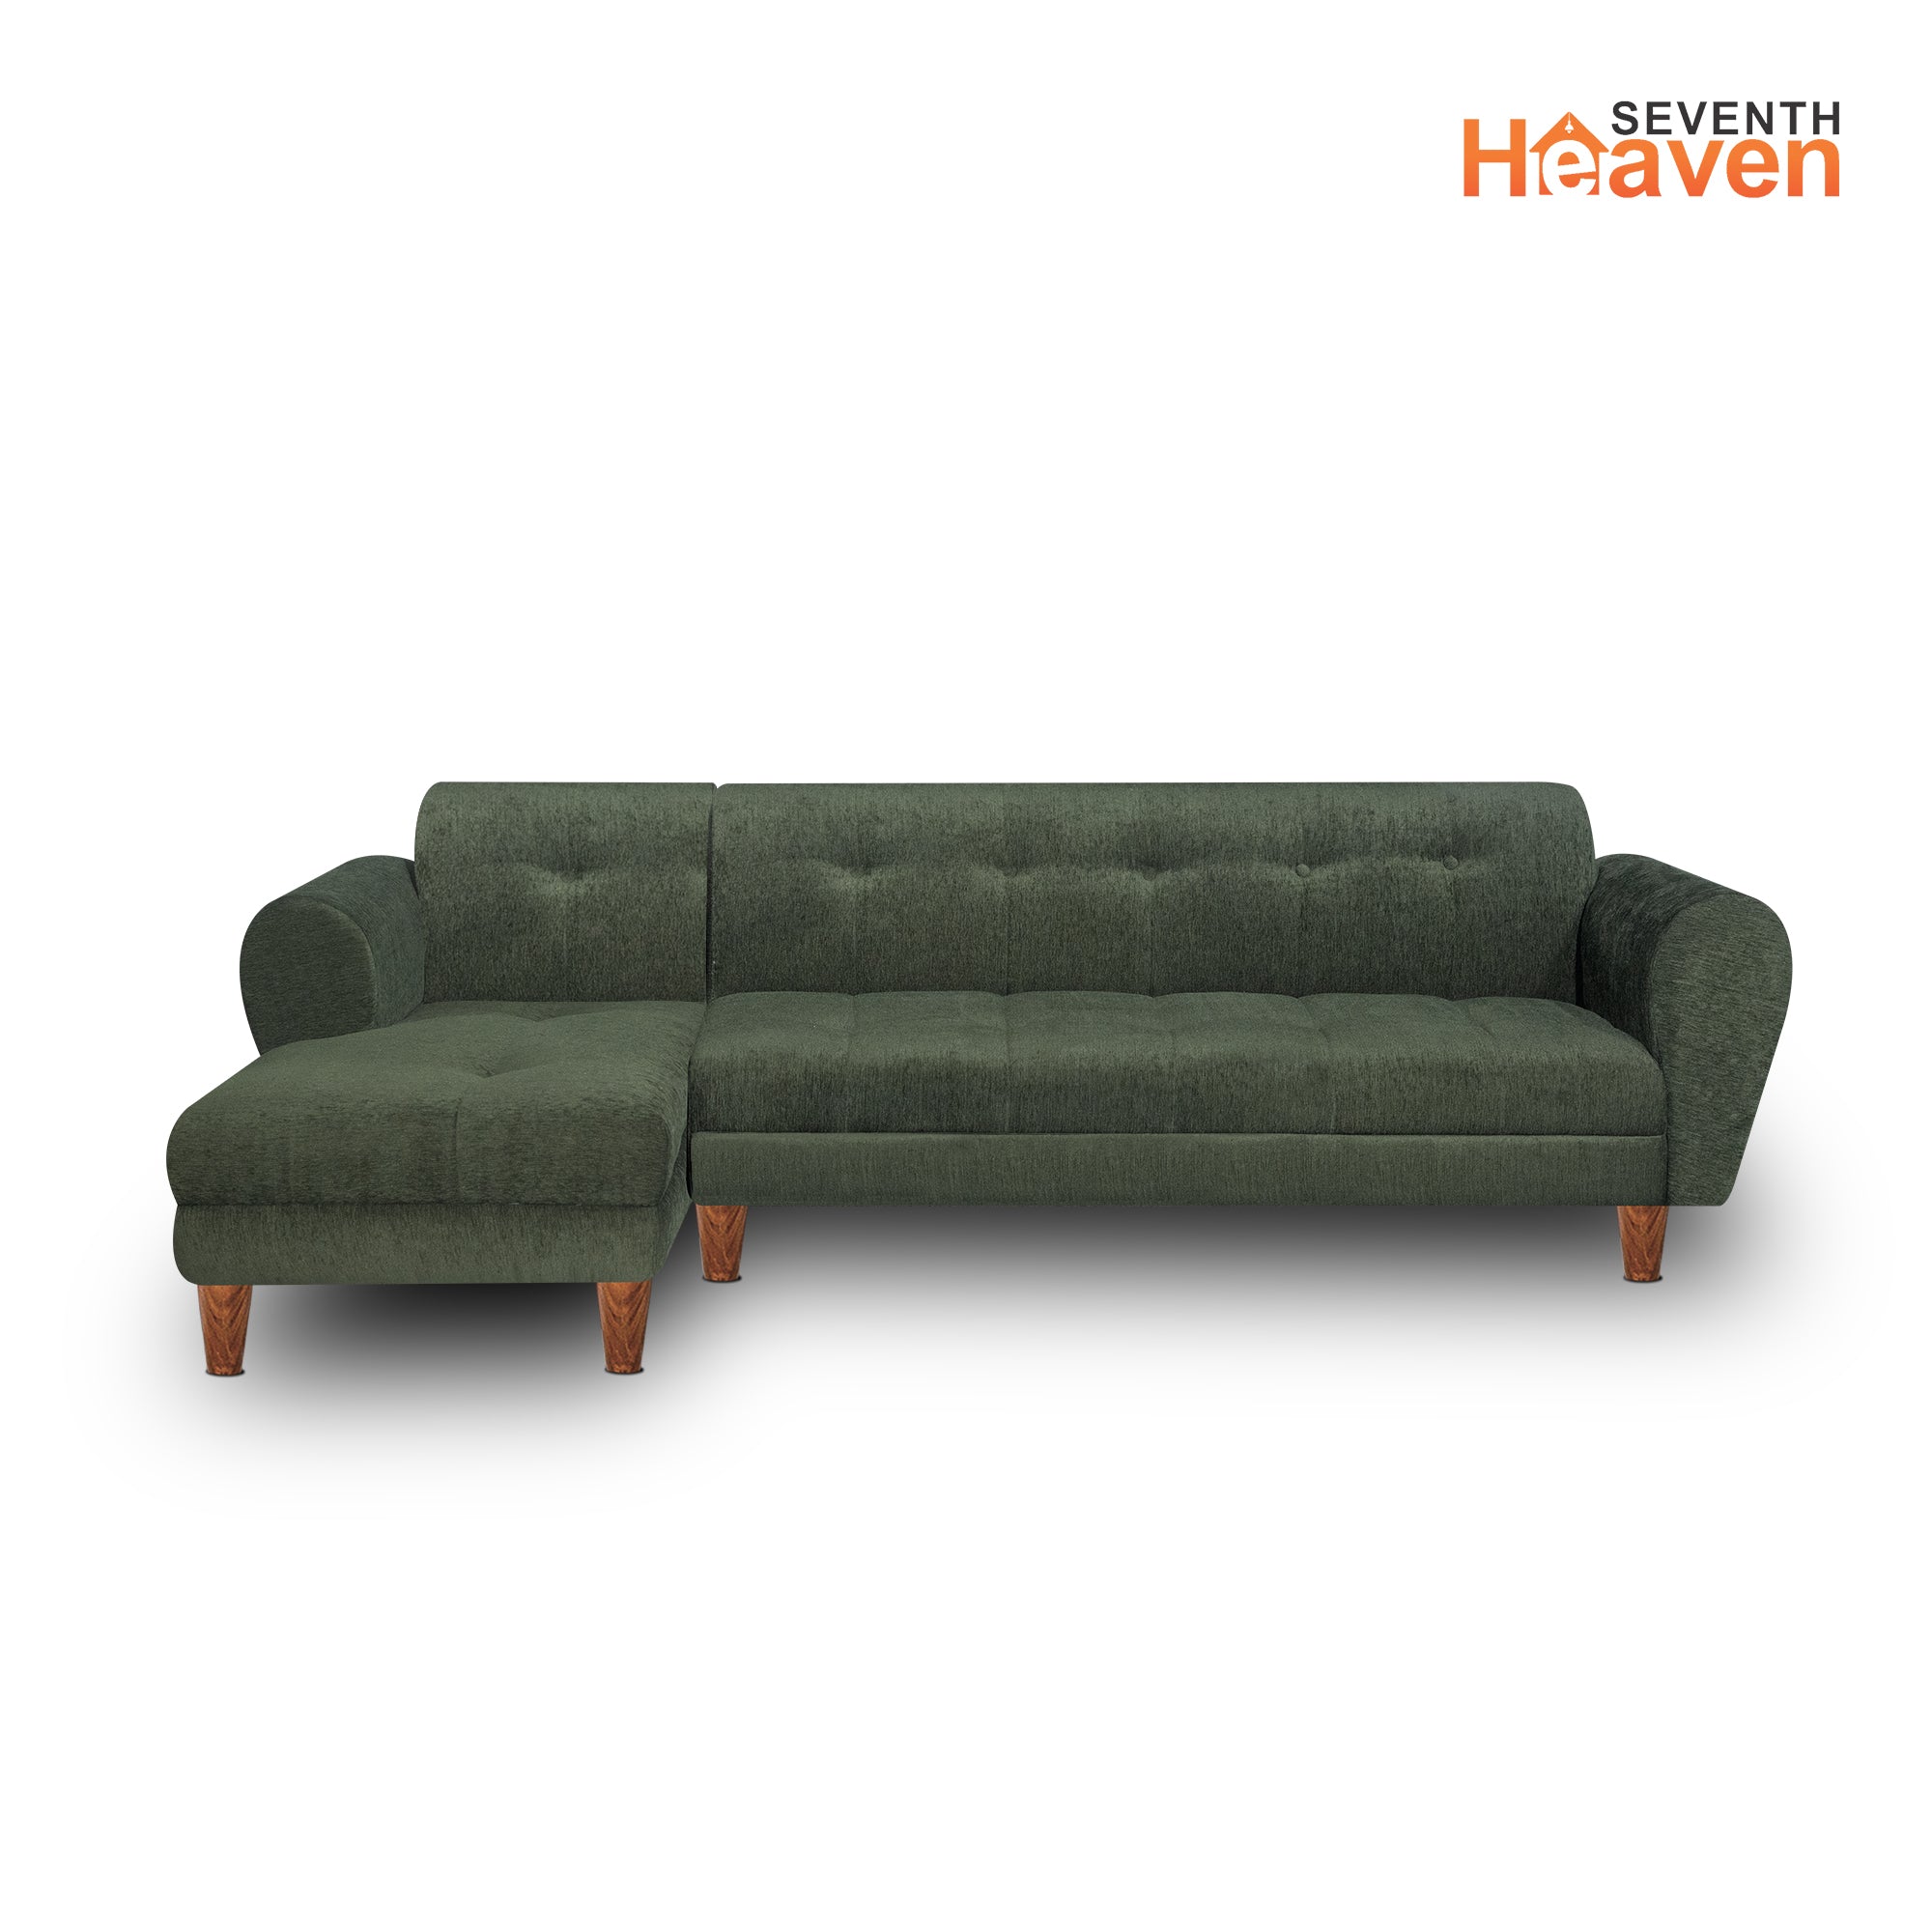 Seventh Heaven Milan 6 Seater Sofa, Extra Spacious, Chenille Molfino Fabric: 3 Year Warranty Fabric 6 Seater Sofa  (Finish Color - Green, DIY(Do-It-Yourself))